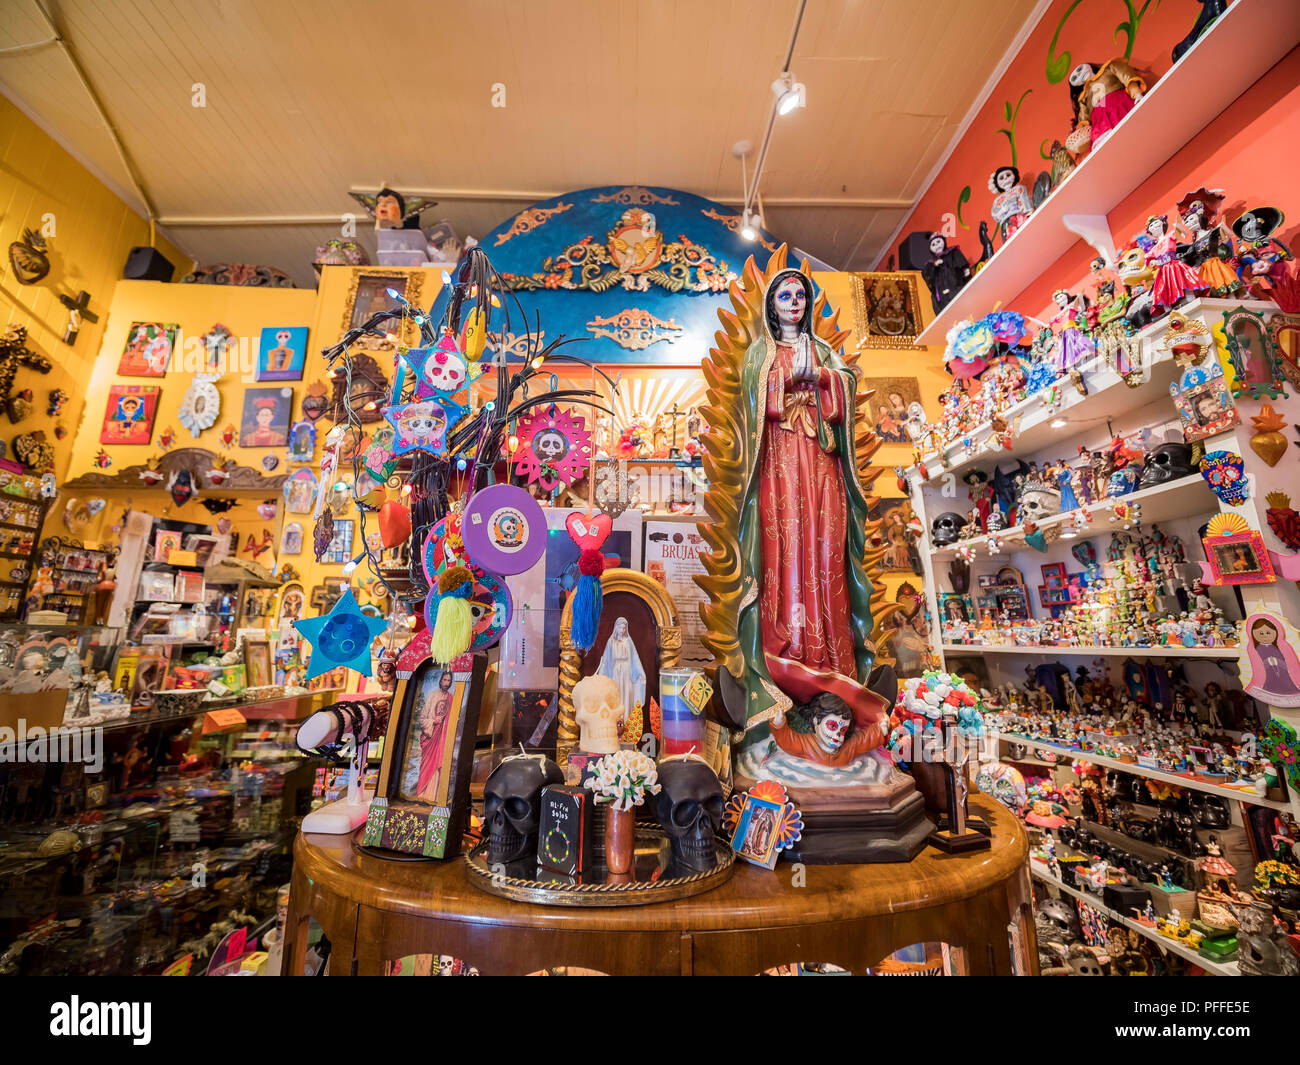 San Francisco, AUG 17: Interior view of a Mexican style shop on AUG 17, 2018 at San Francisco, California Stock Photo